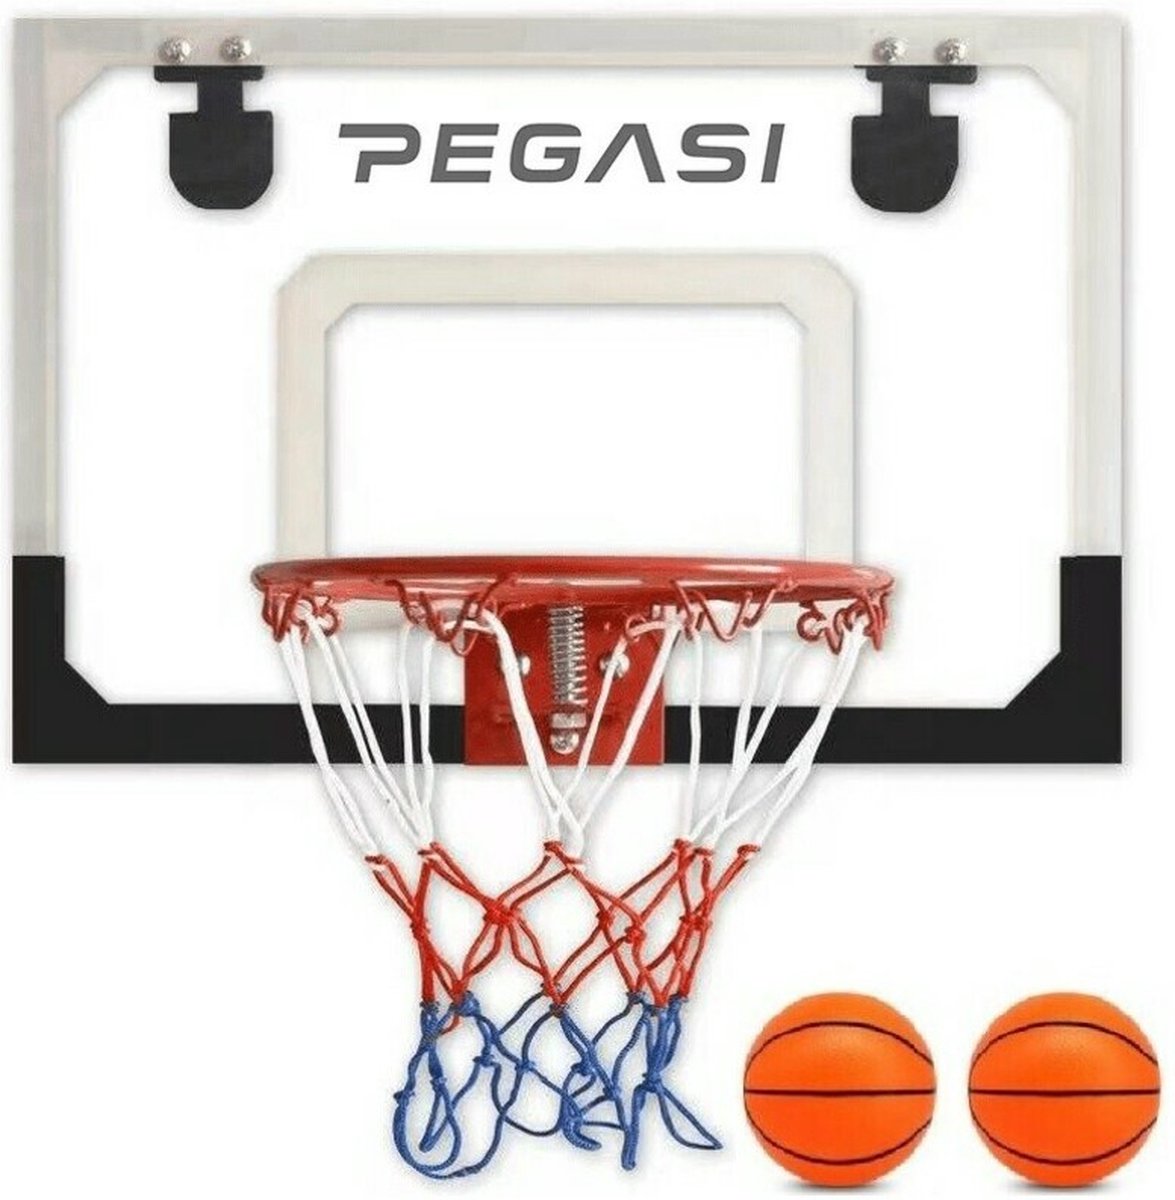 Pegasi Mini Basketbalbord Deur 45x30cm - Basketbalring deur met bord - Inclusief basketbalring, bal en pomp - PEGASI